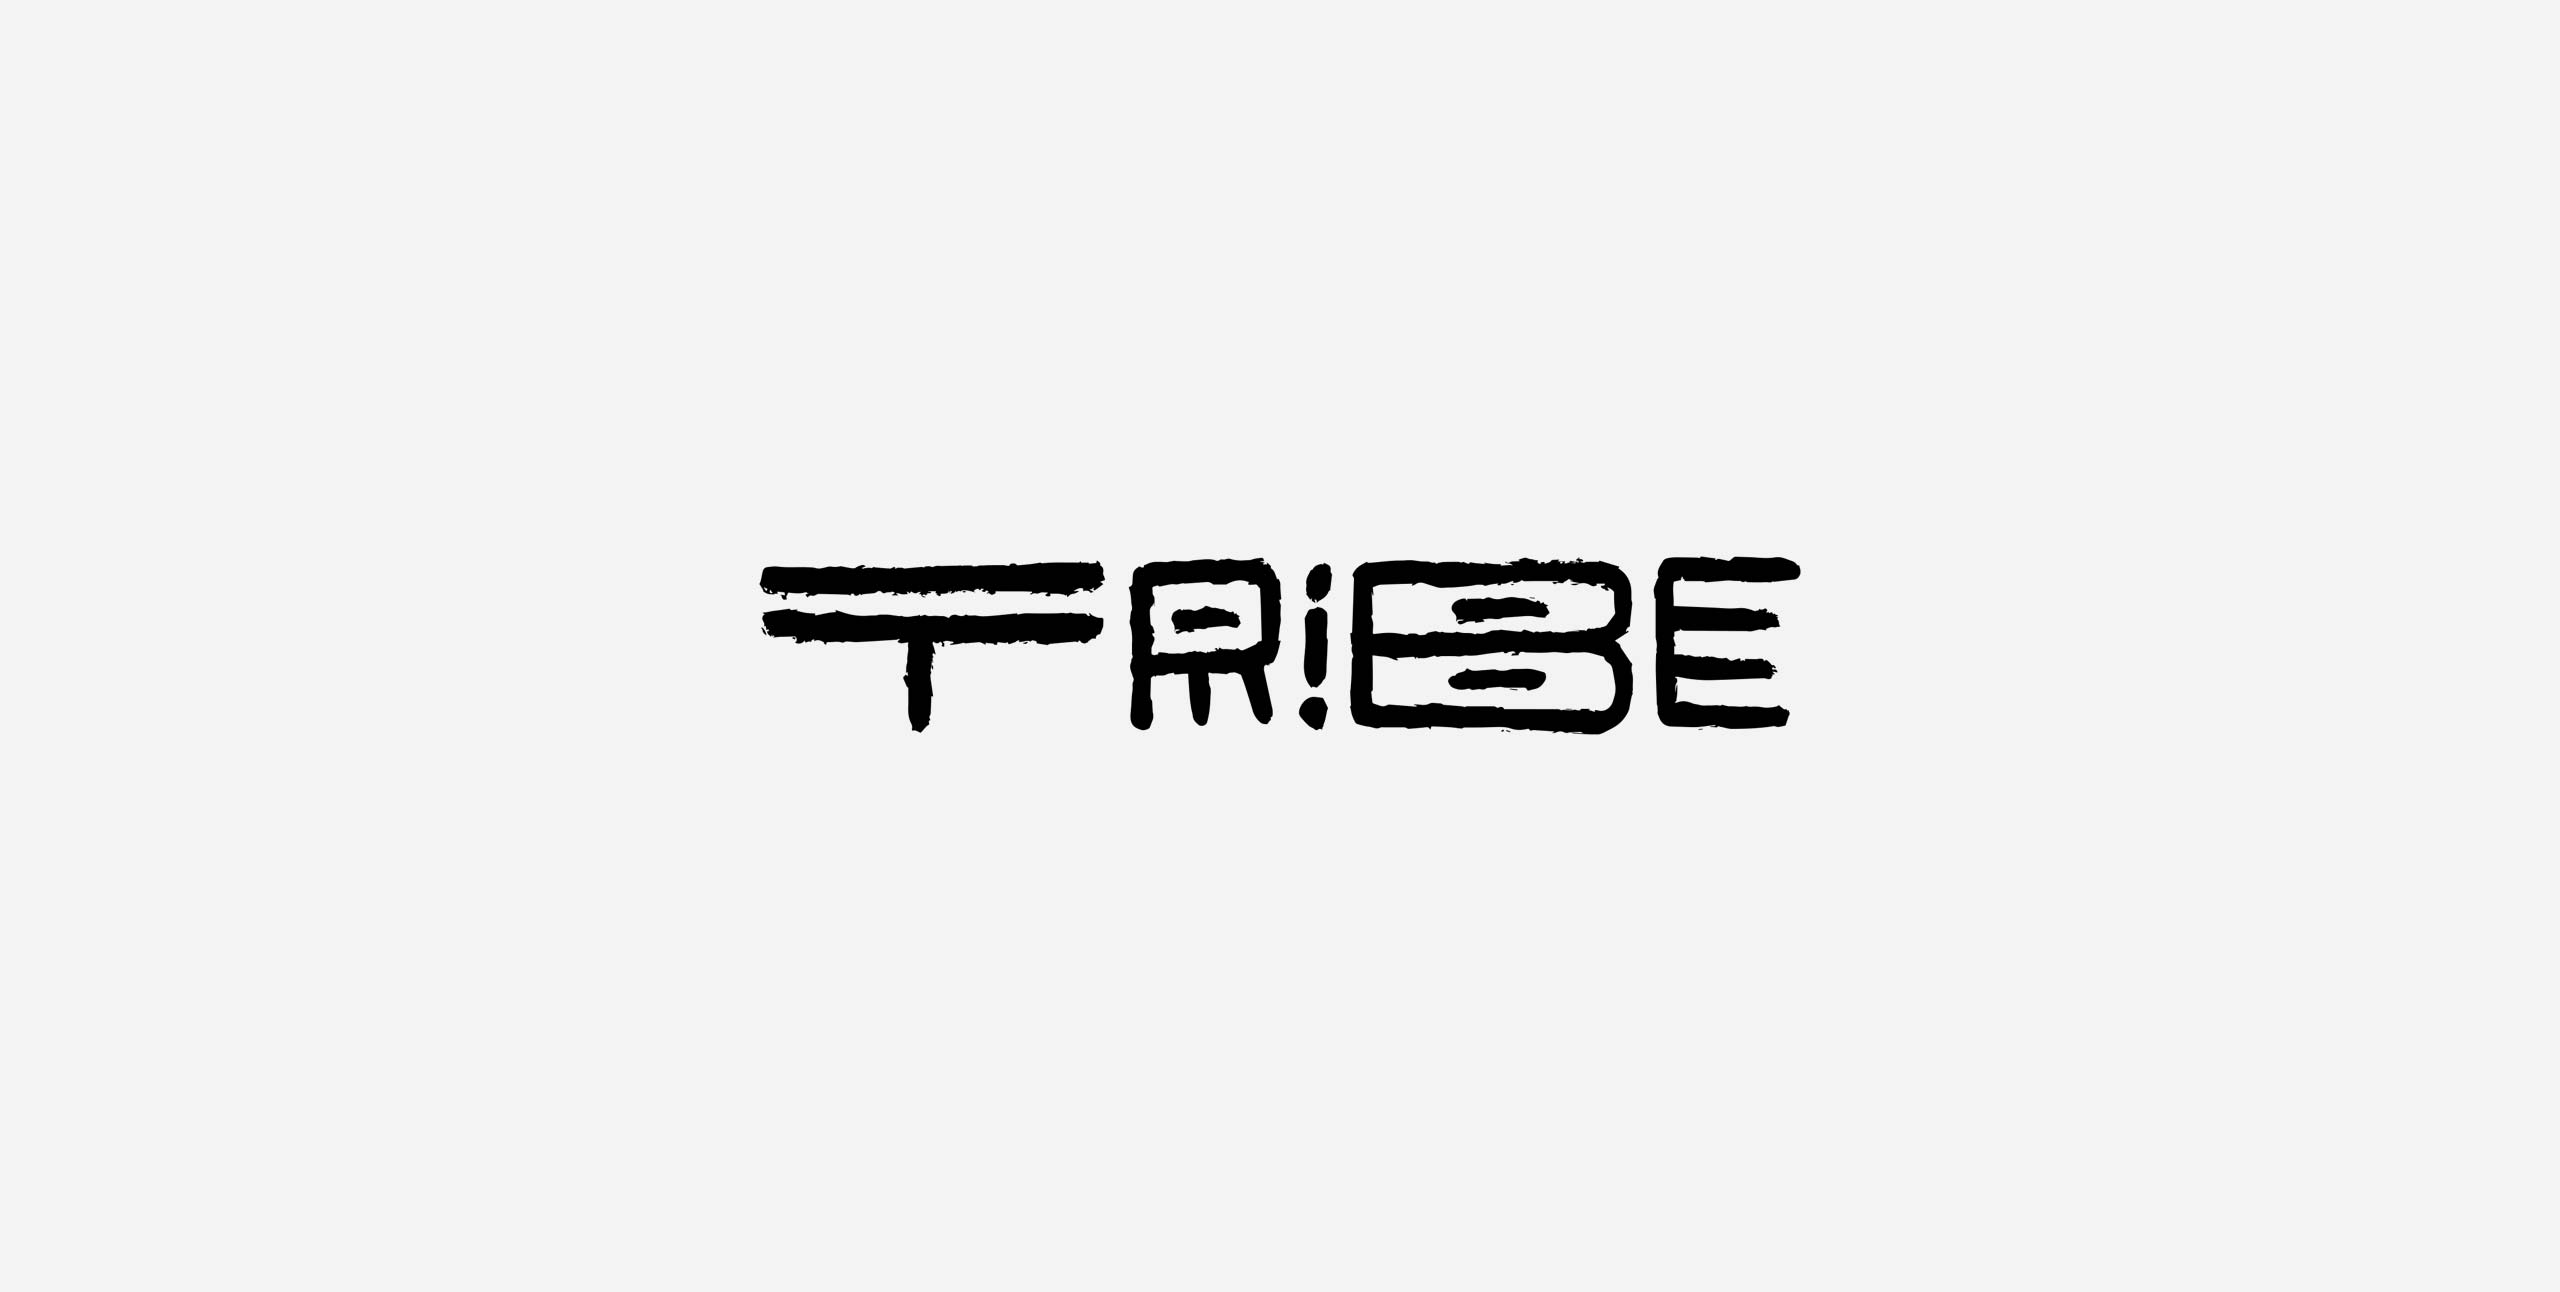 TRIBE - logo development by the freelance art director UI UX Designer Christoph Gey from Leipzig, Germany